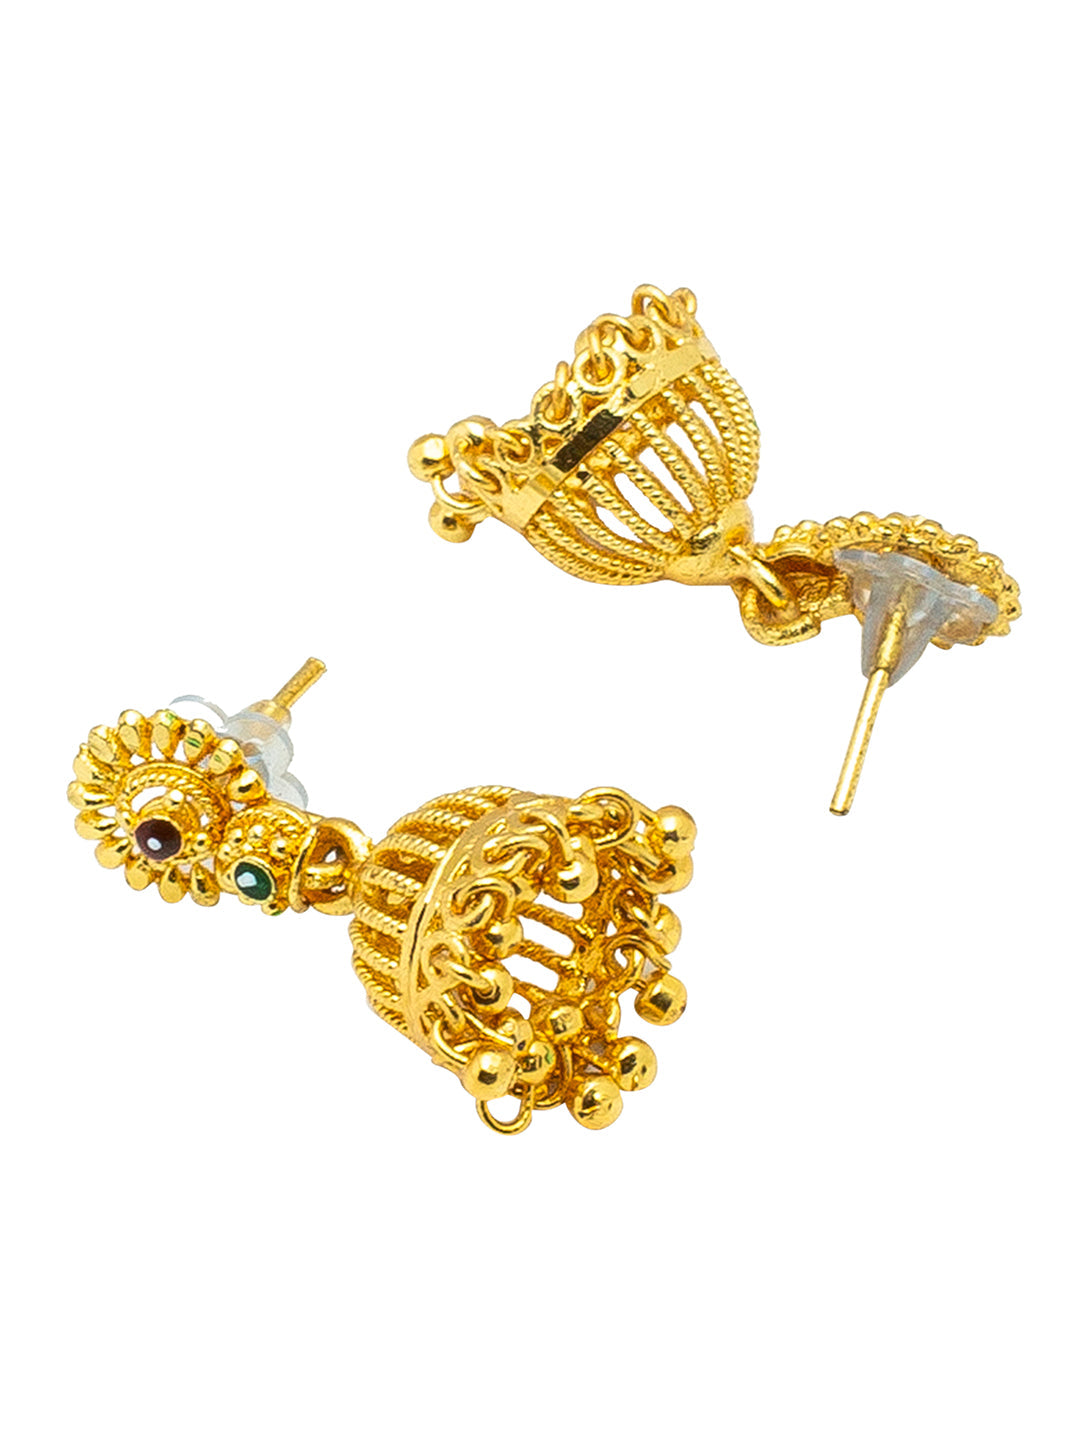 Shining Jewel Small Size Gold Plated Jhumka Earrings for women (SJ_1664)